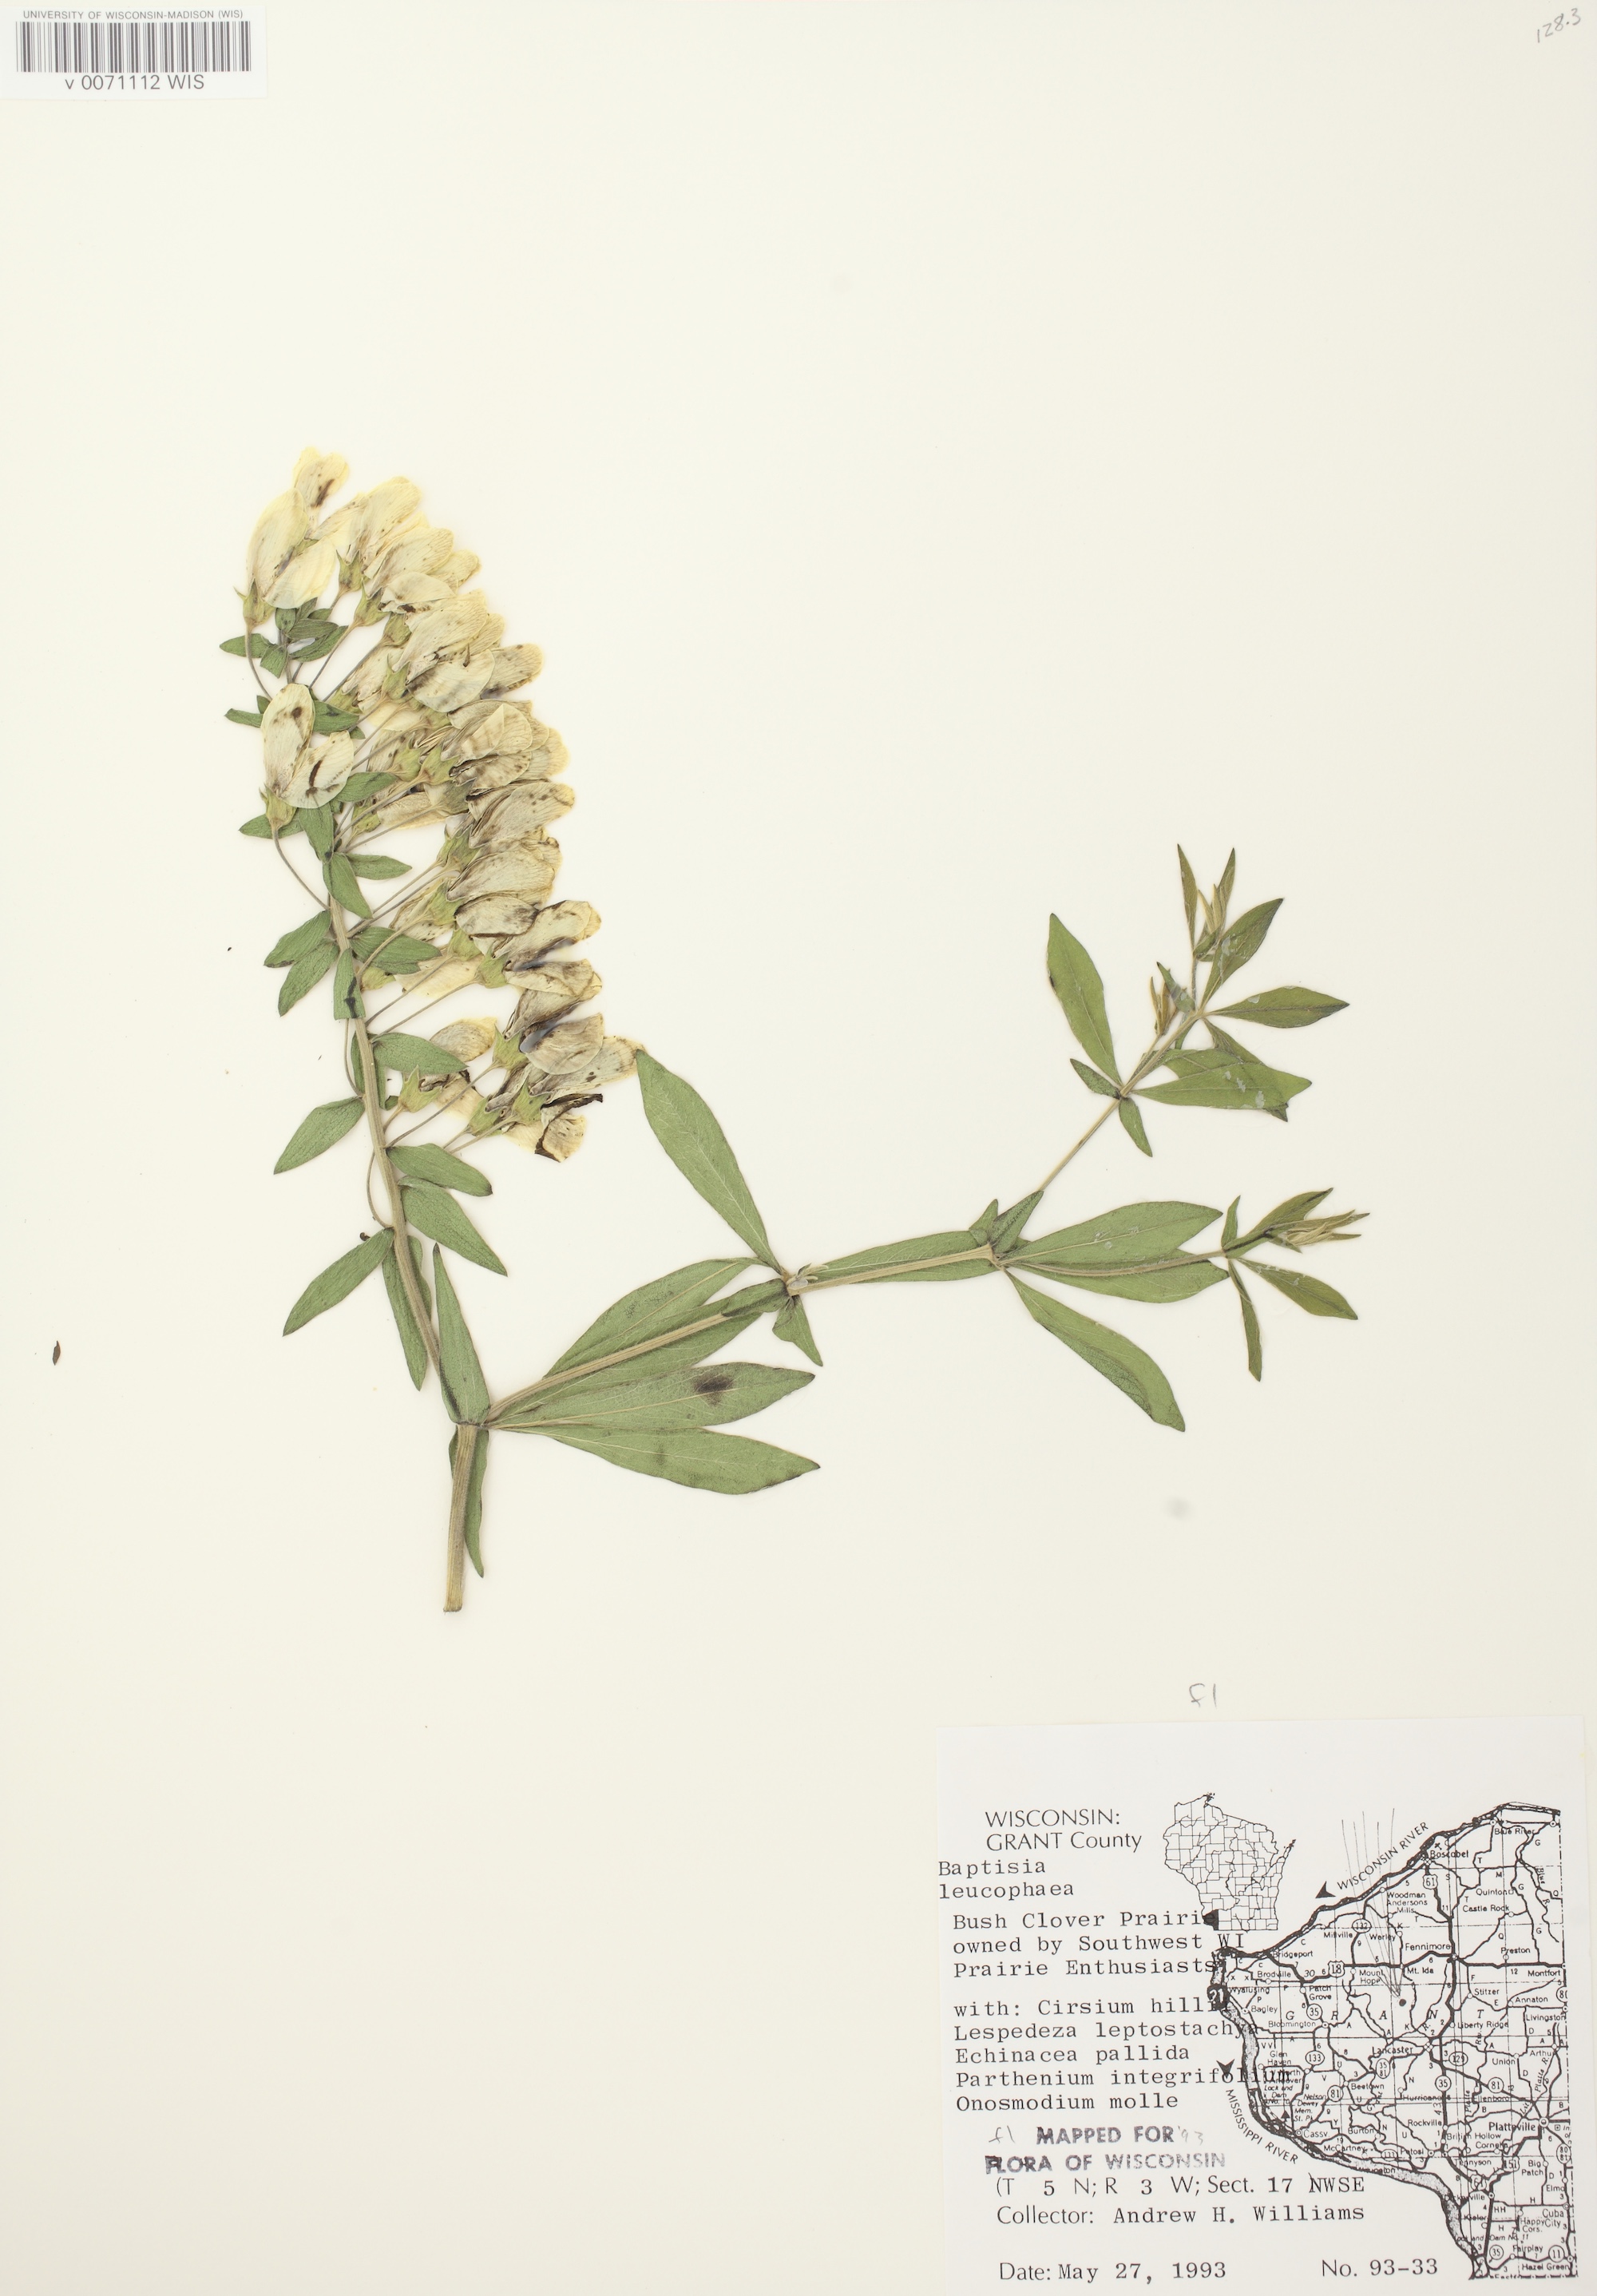 Cream Wild Indigo (Baptisia leucophaea) specimen collected in Grant County on May 27, 1993.